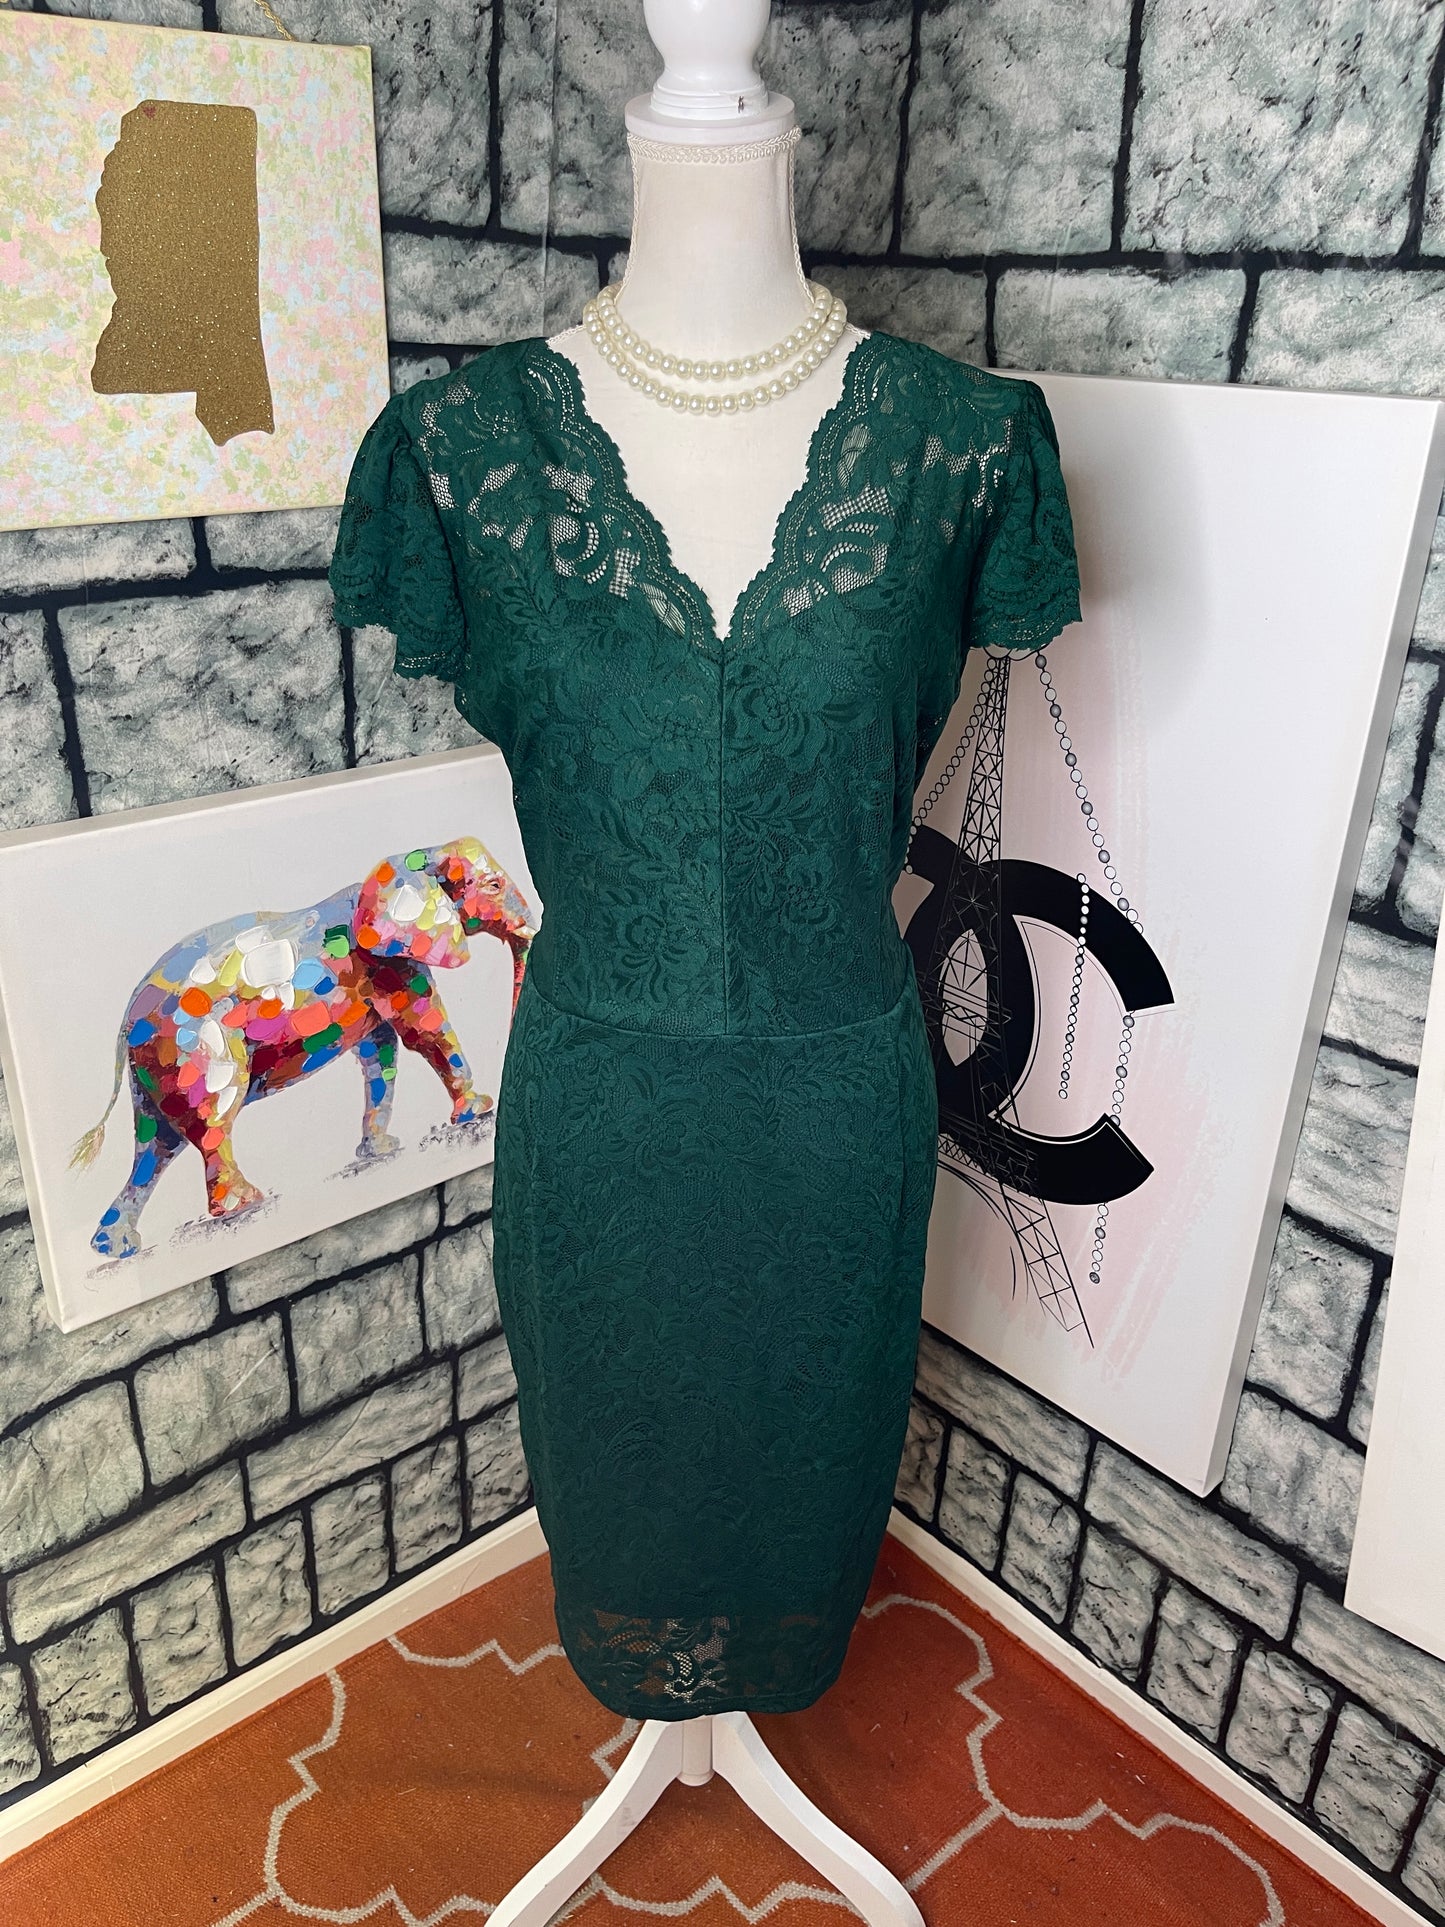 NEW Miusol Green Dress Women sz XL